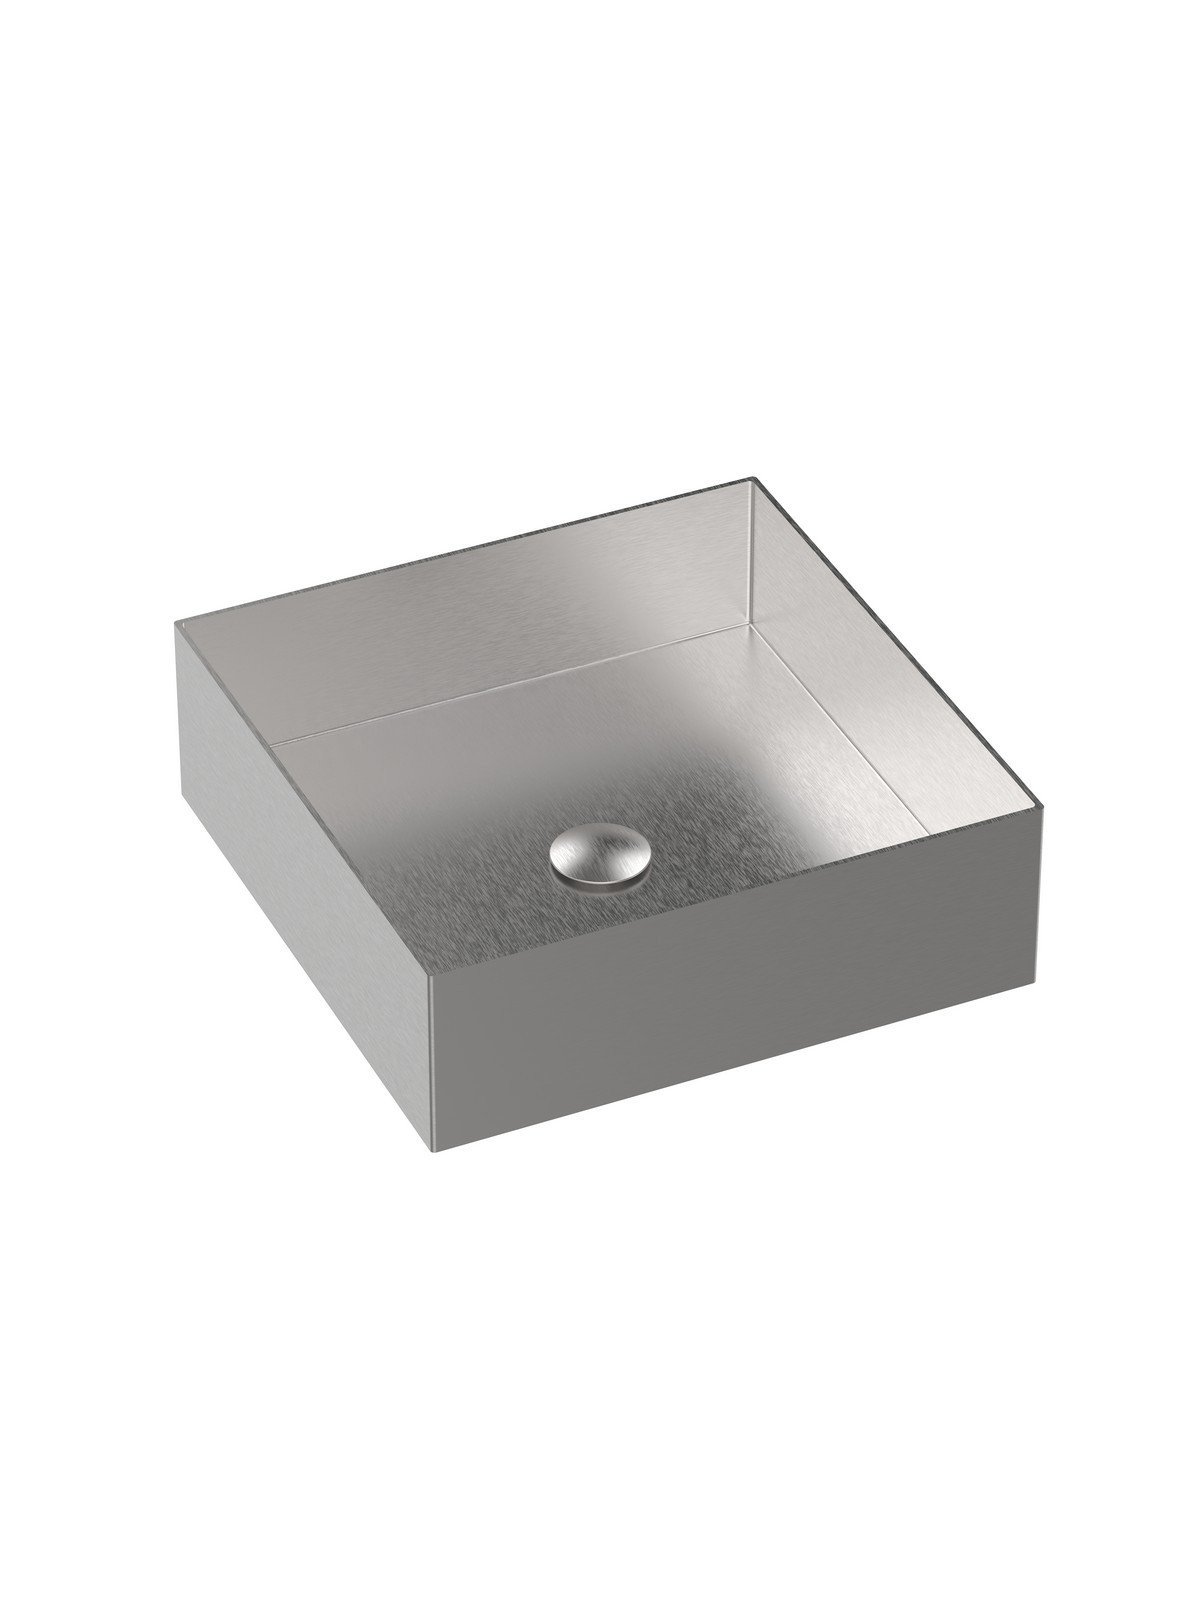 400x400 mm Countertop basin with universal push drain